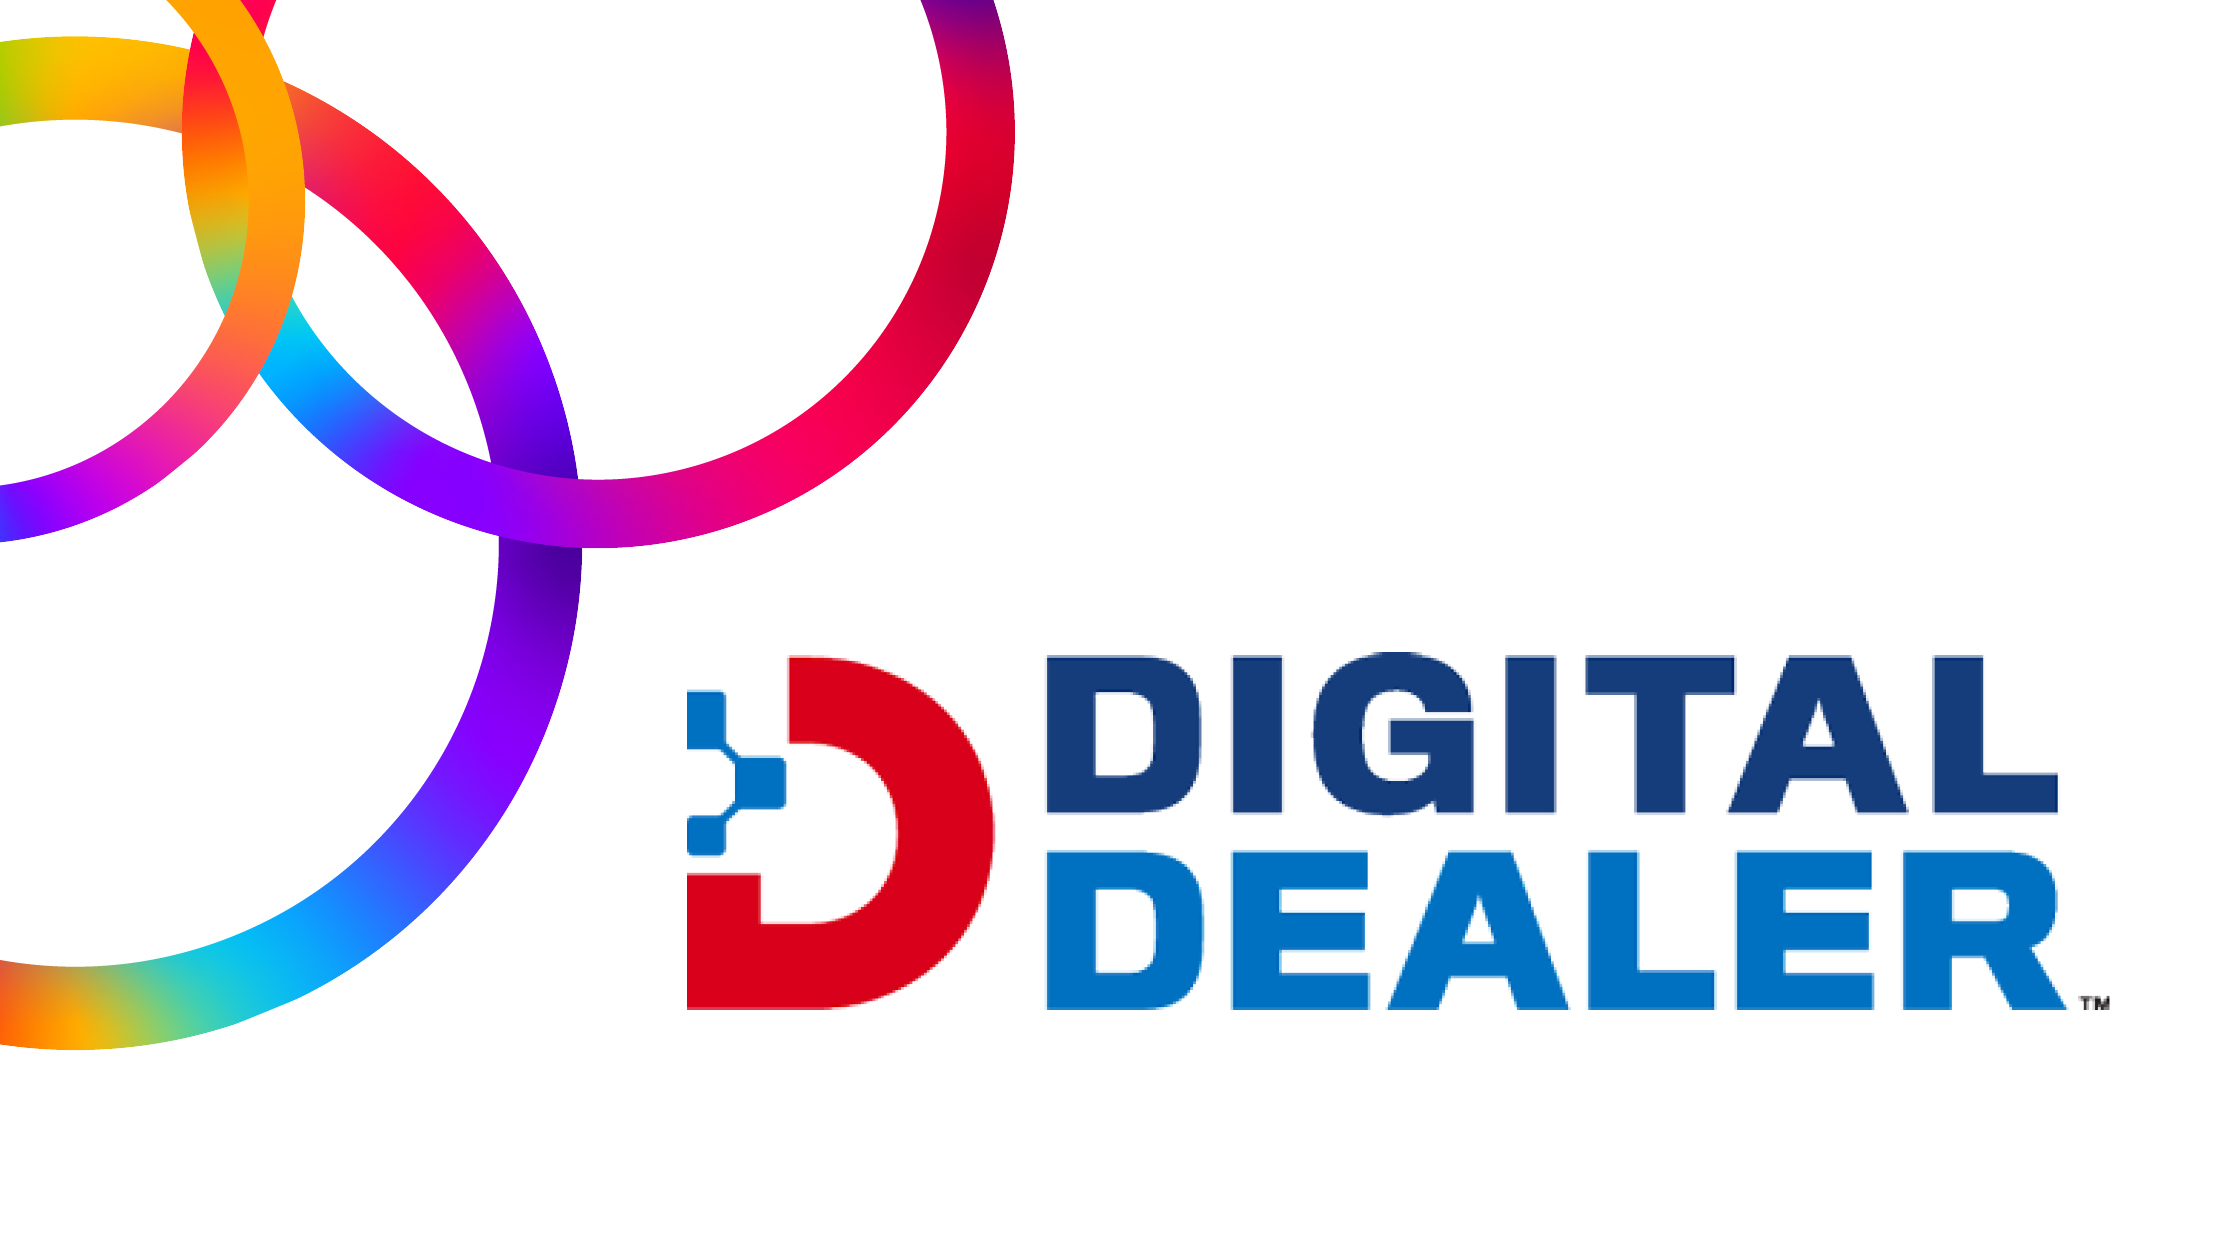 360 AUTO's CEO gives CX Talk at 2020 Digital Dealer